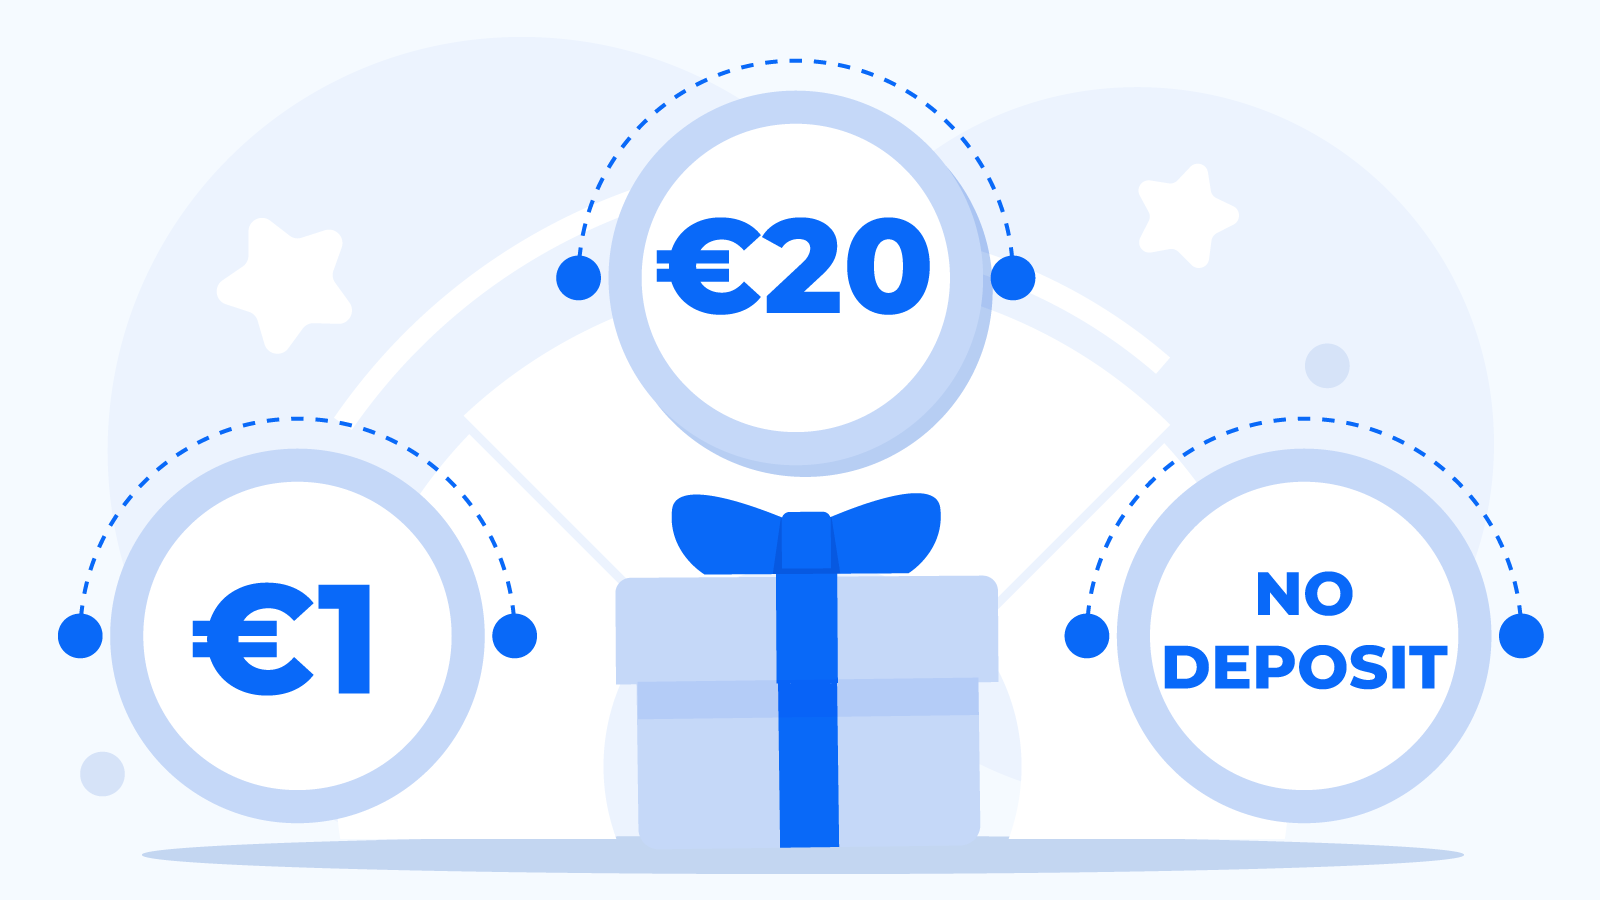 Alternatives for Free €10 No Deposit Casino Offers